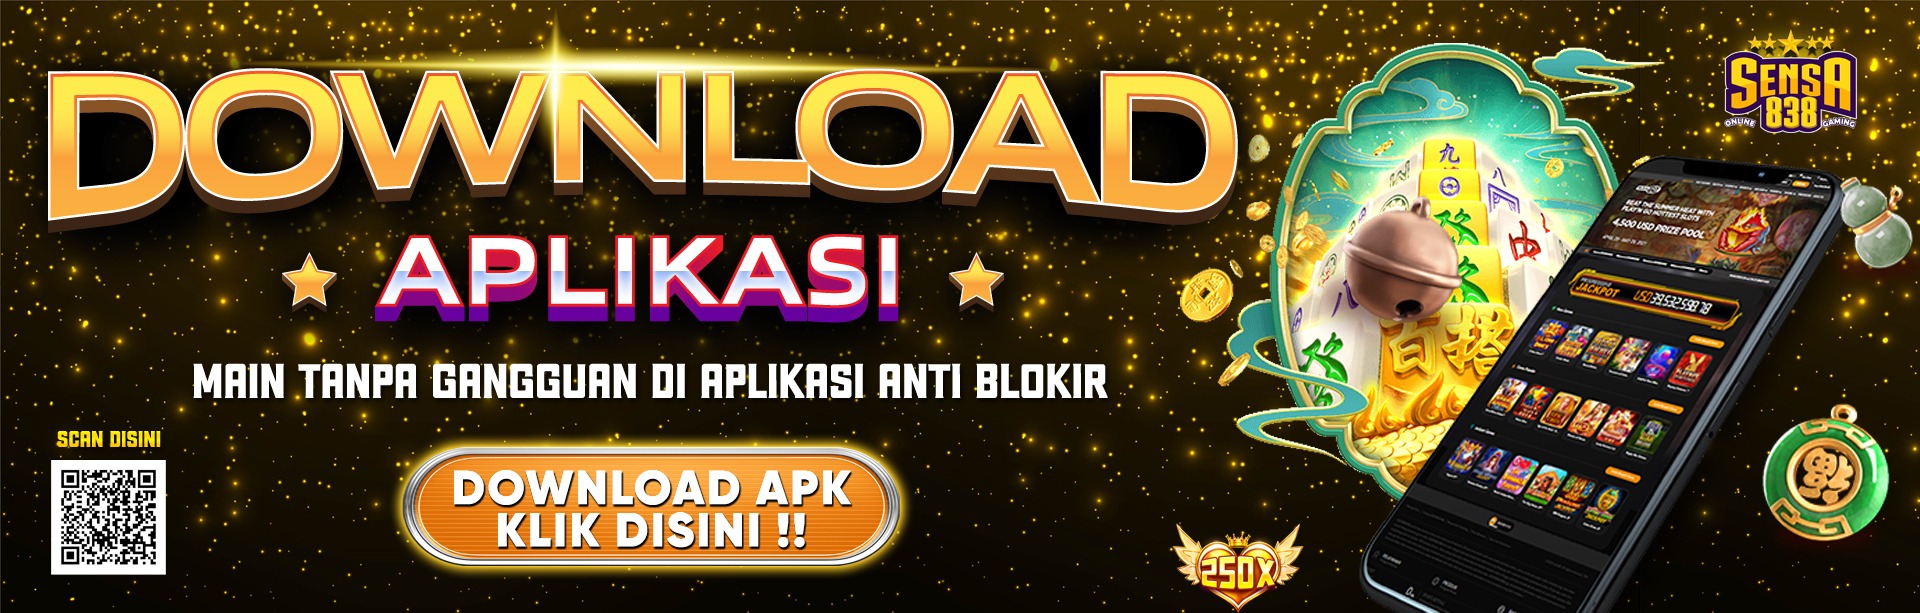 Download Aplikasi SENSA838